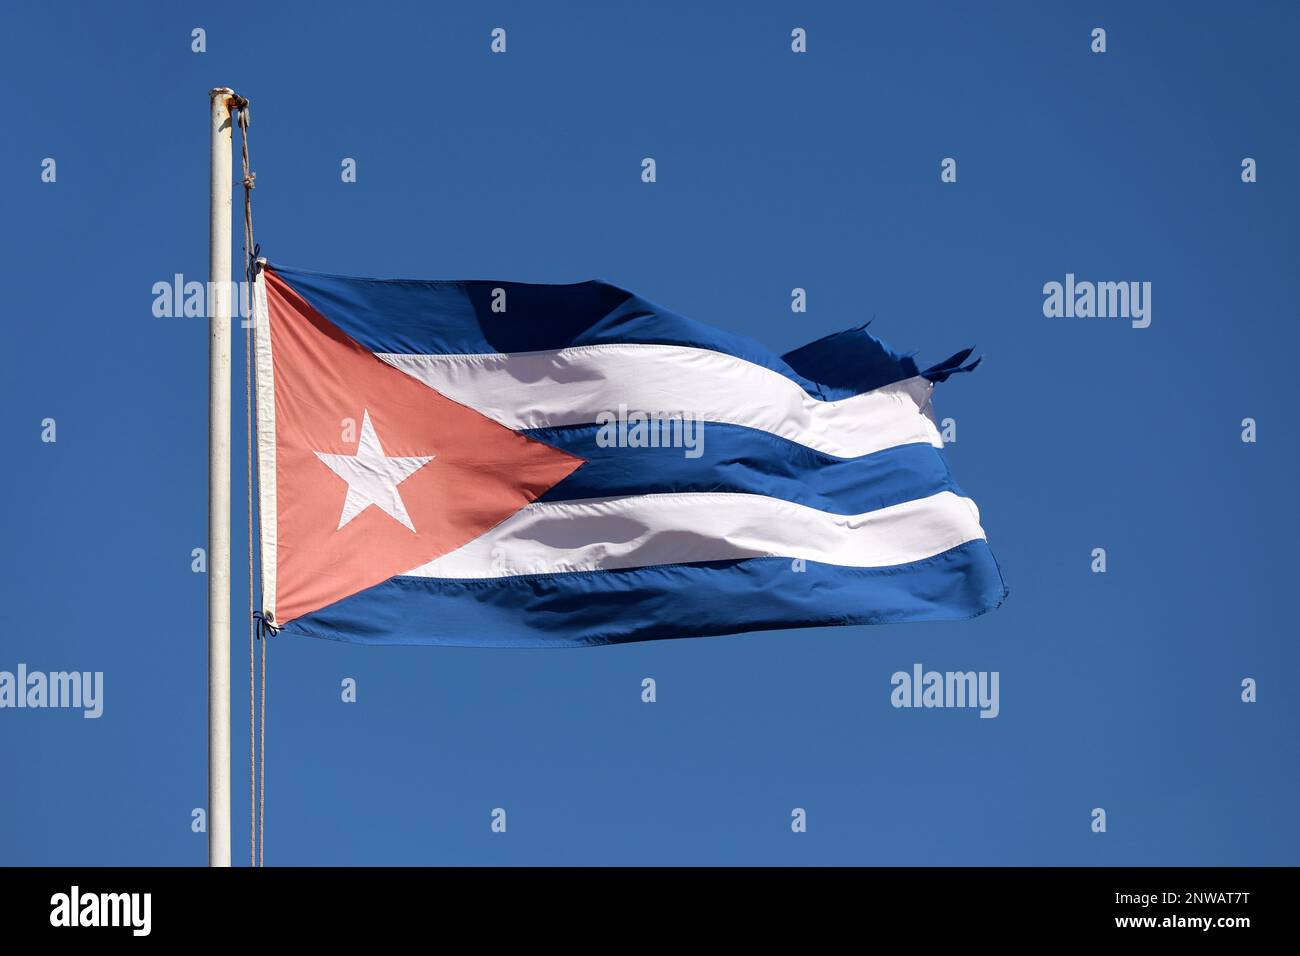 Le drapeau national de Cuba agite contre le ciel bleu Banque D'Images